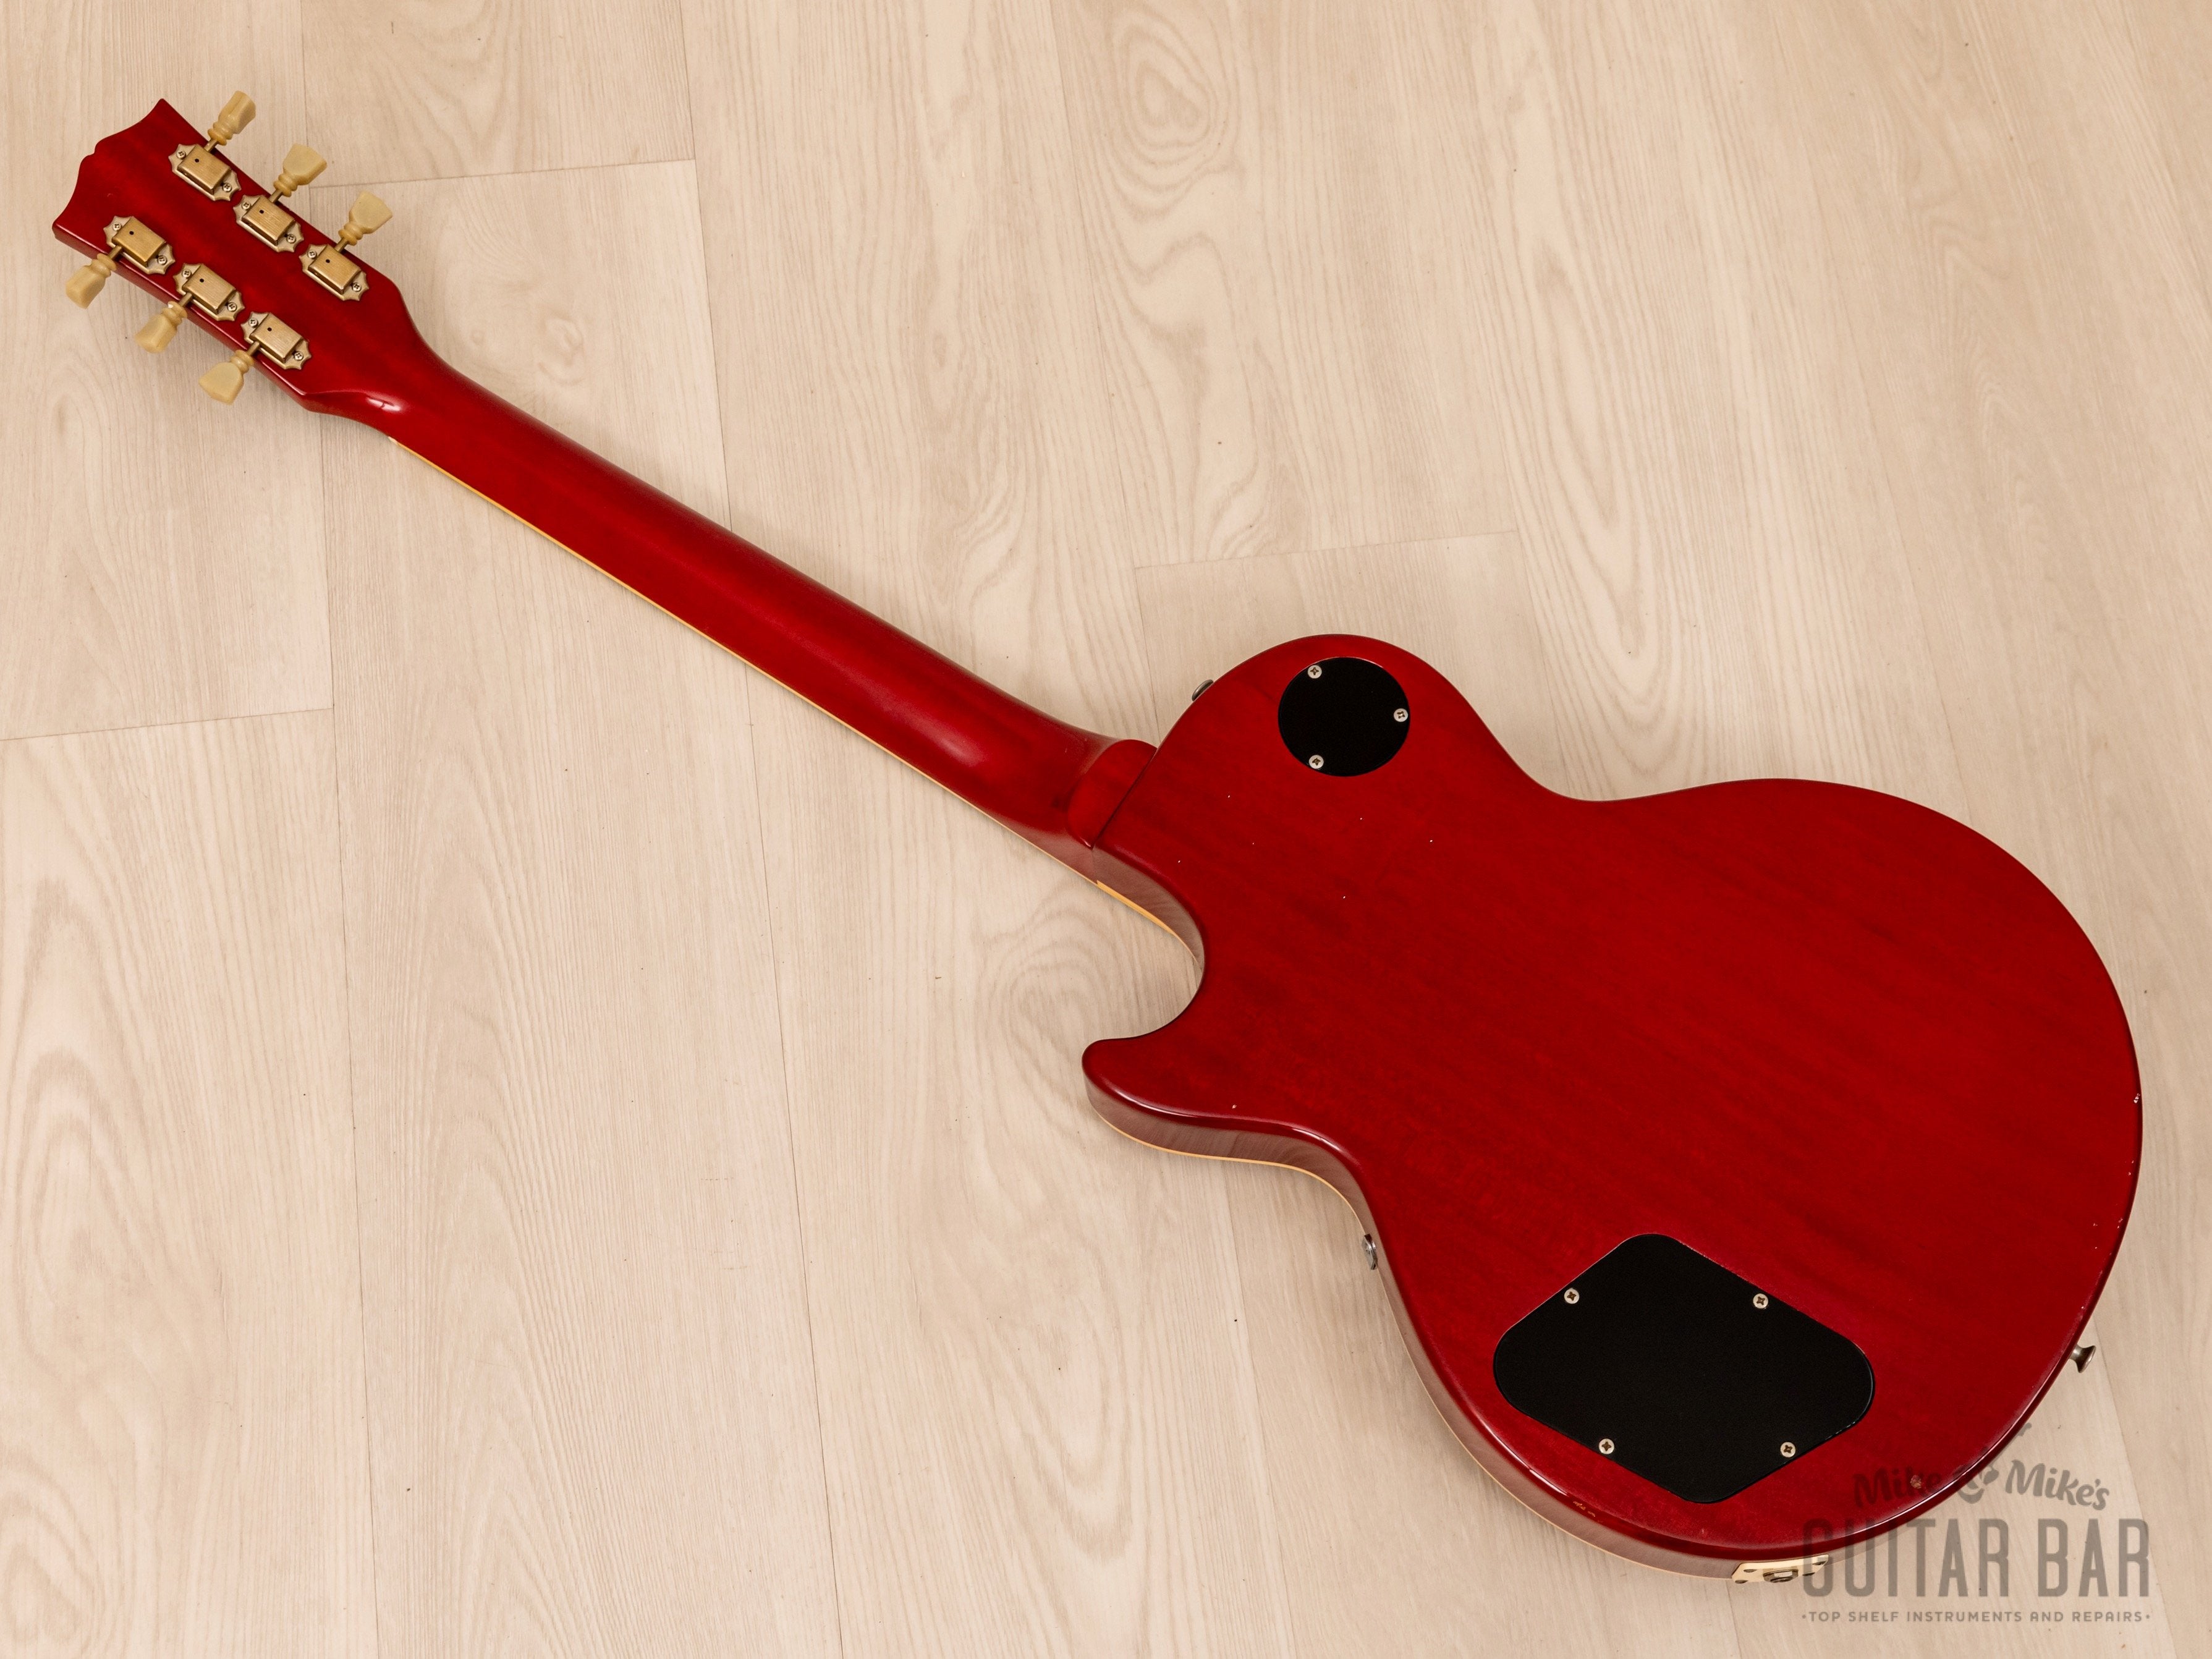 1979 Tokai Les Paul Reborn LS120 Vintage Flame Top Guitar, Collector-Grade w/ Case, Love Rock